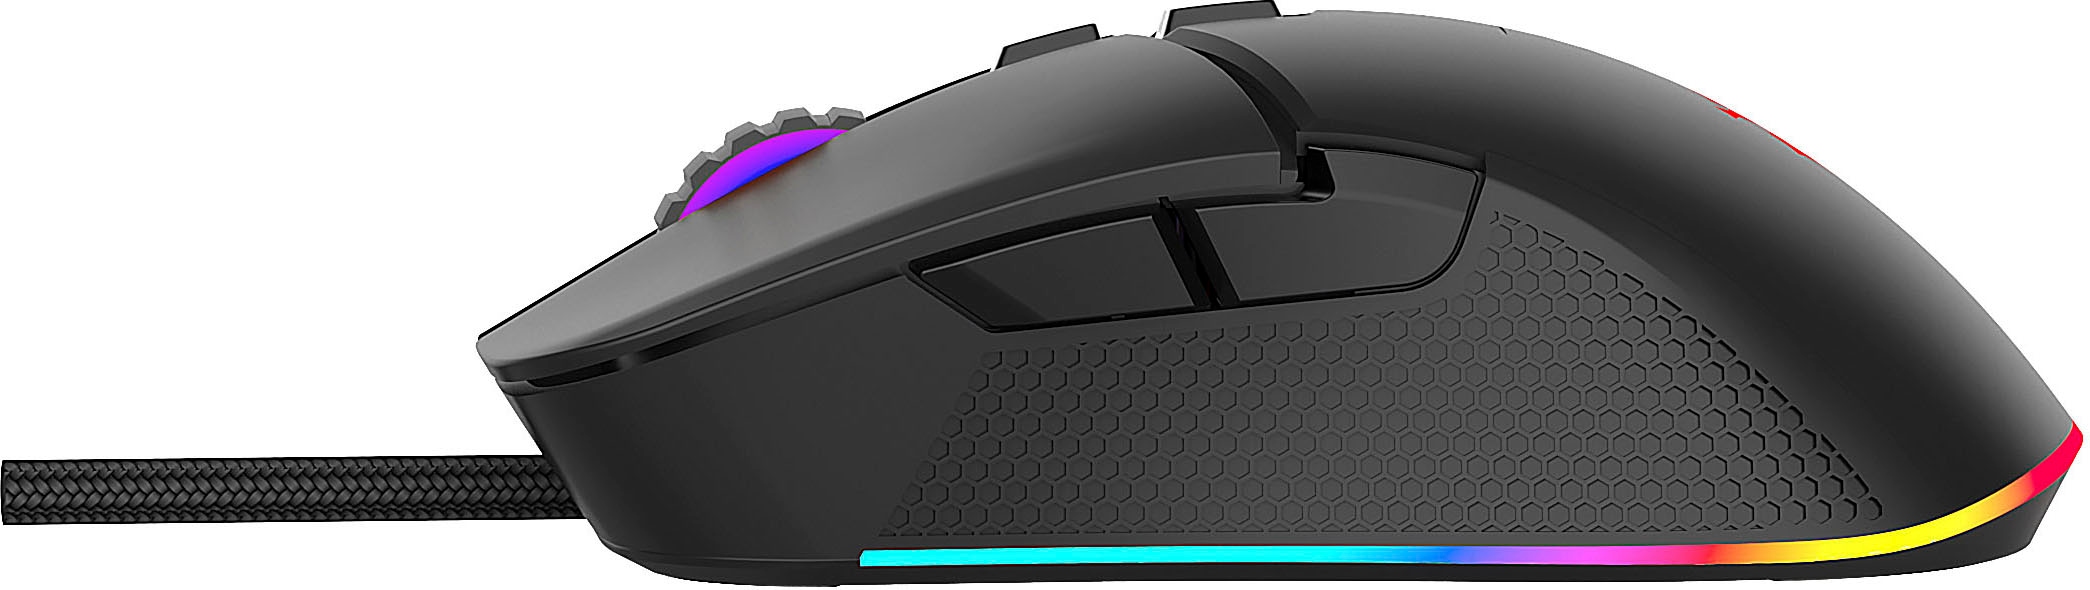 Hyrican Gaming-Maus »Stiker Gaming-Maus, kabelgebunden« USB, online Beleuchtung, RGB | bestellen LED UNIVERSAL